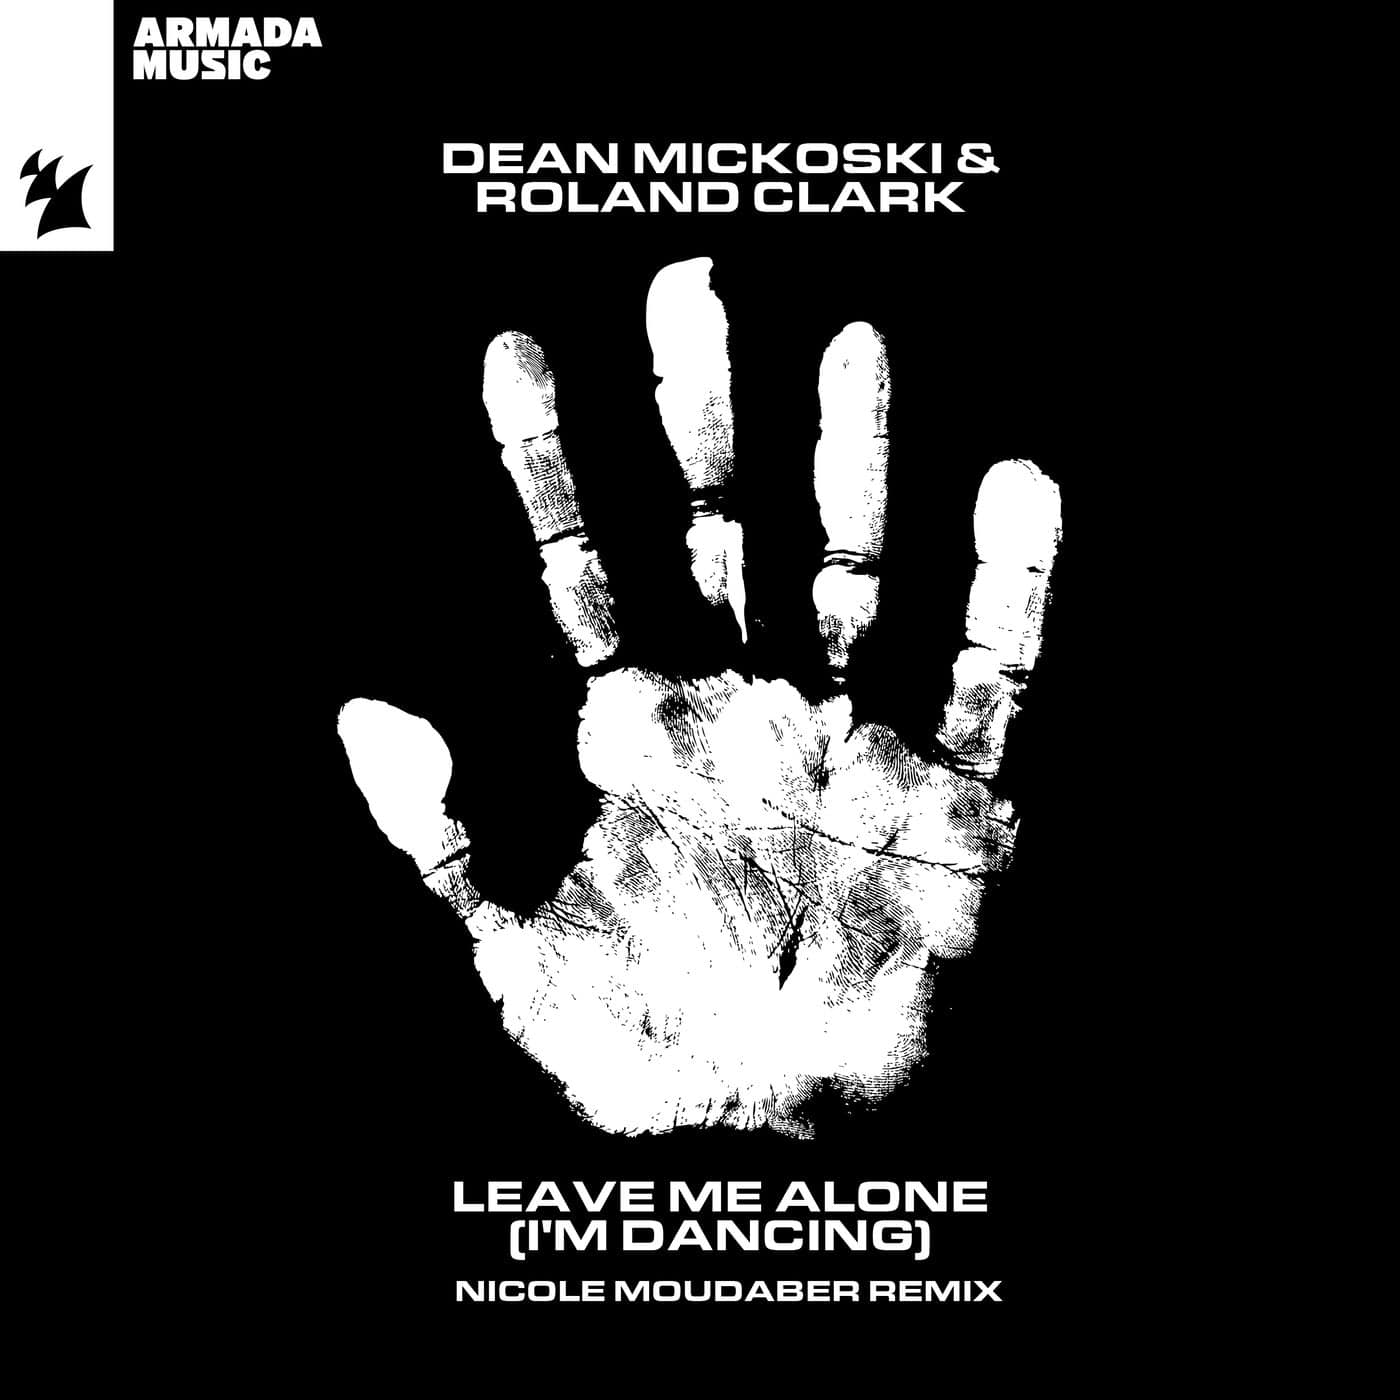 Download Roland Clark, Dean Mickoski - Leave Me Alone (I'm Dancing) - Nicole Moudaber Remix on Electrobuzz